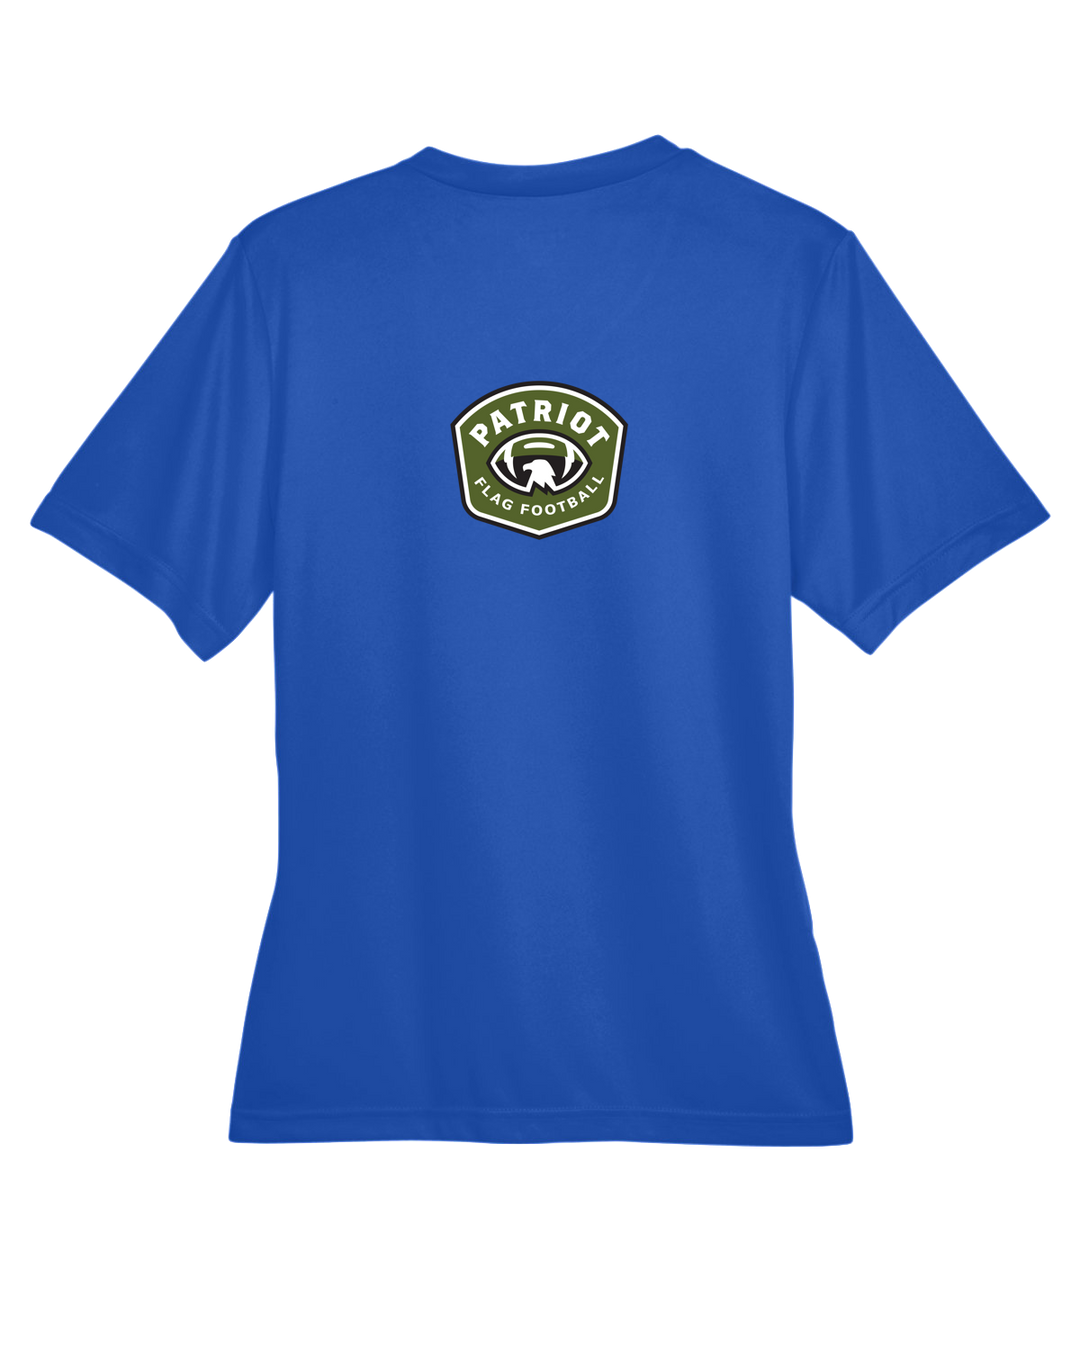 Flag Football Giants - Team 365 Ladies' Zone Performance T-Shirt (TT11W)